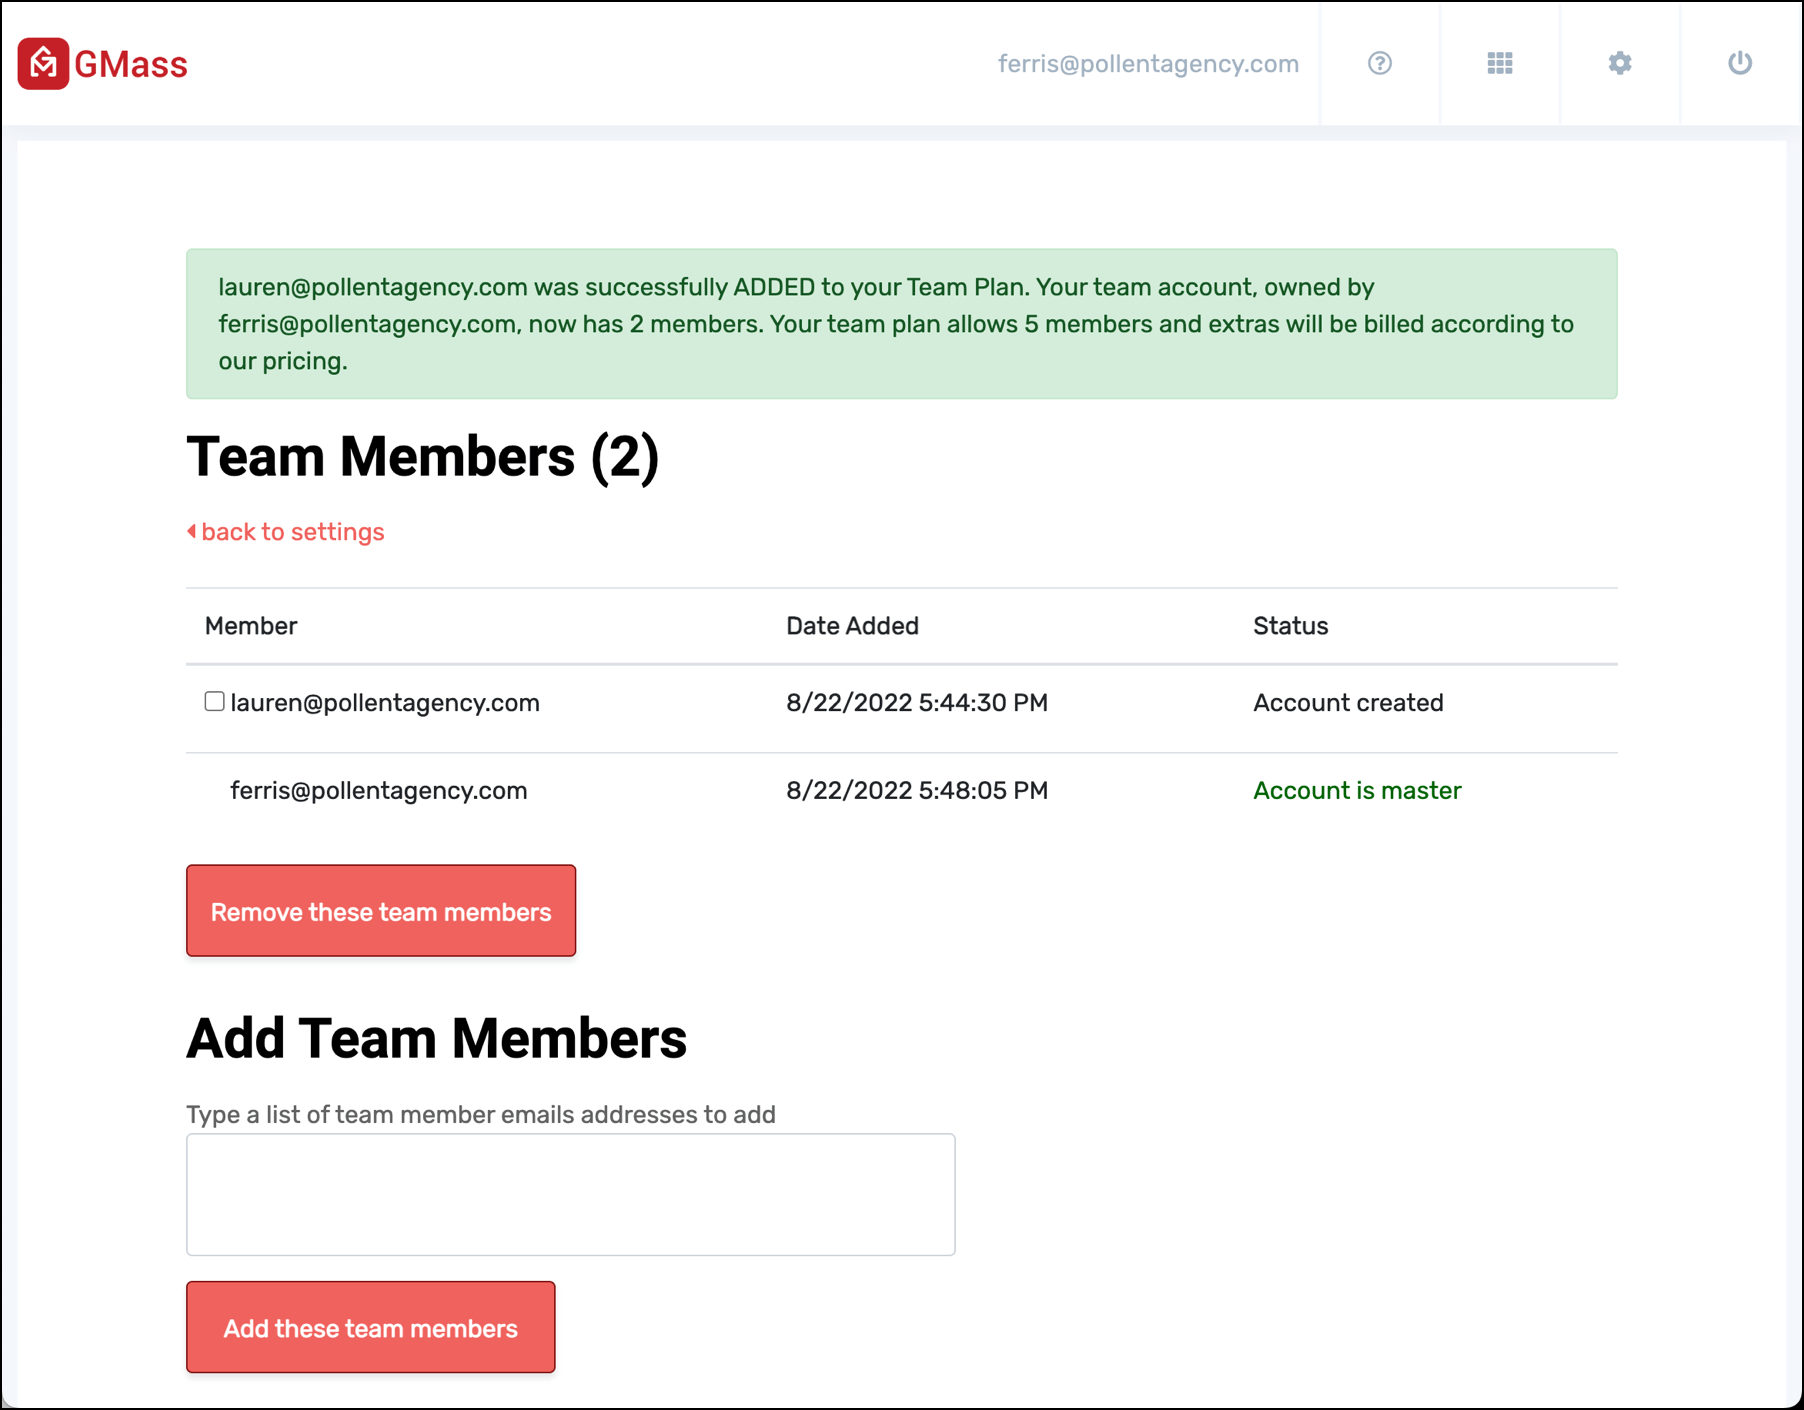 Added team member in the list